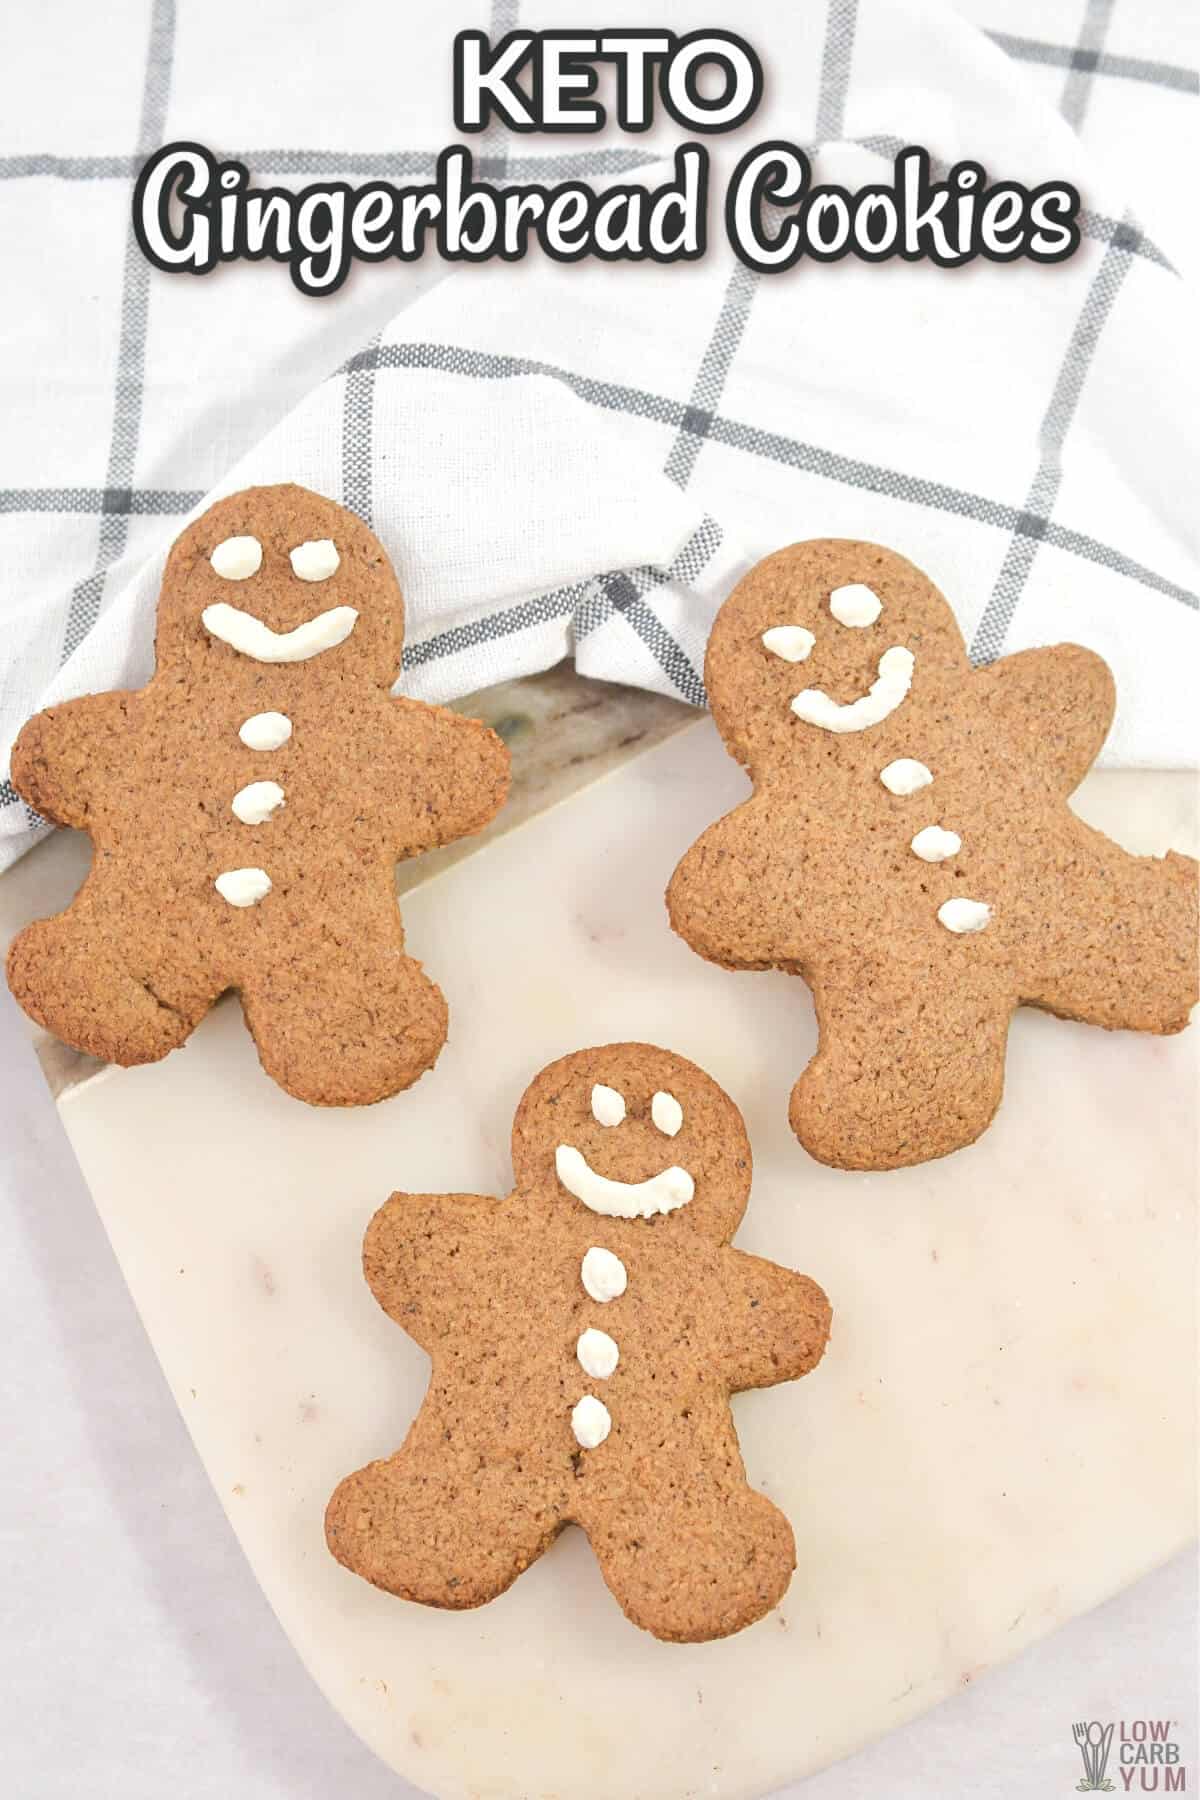 keto gingerbread cookies recipe cover image